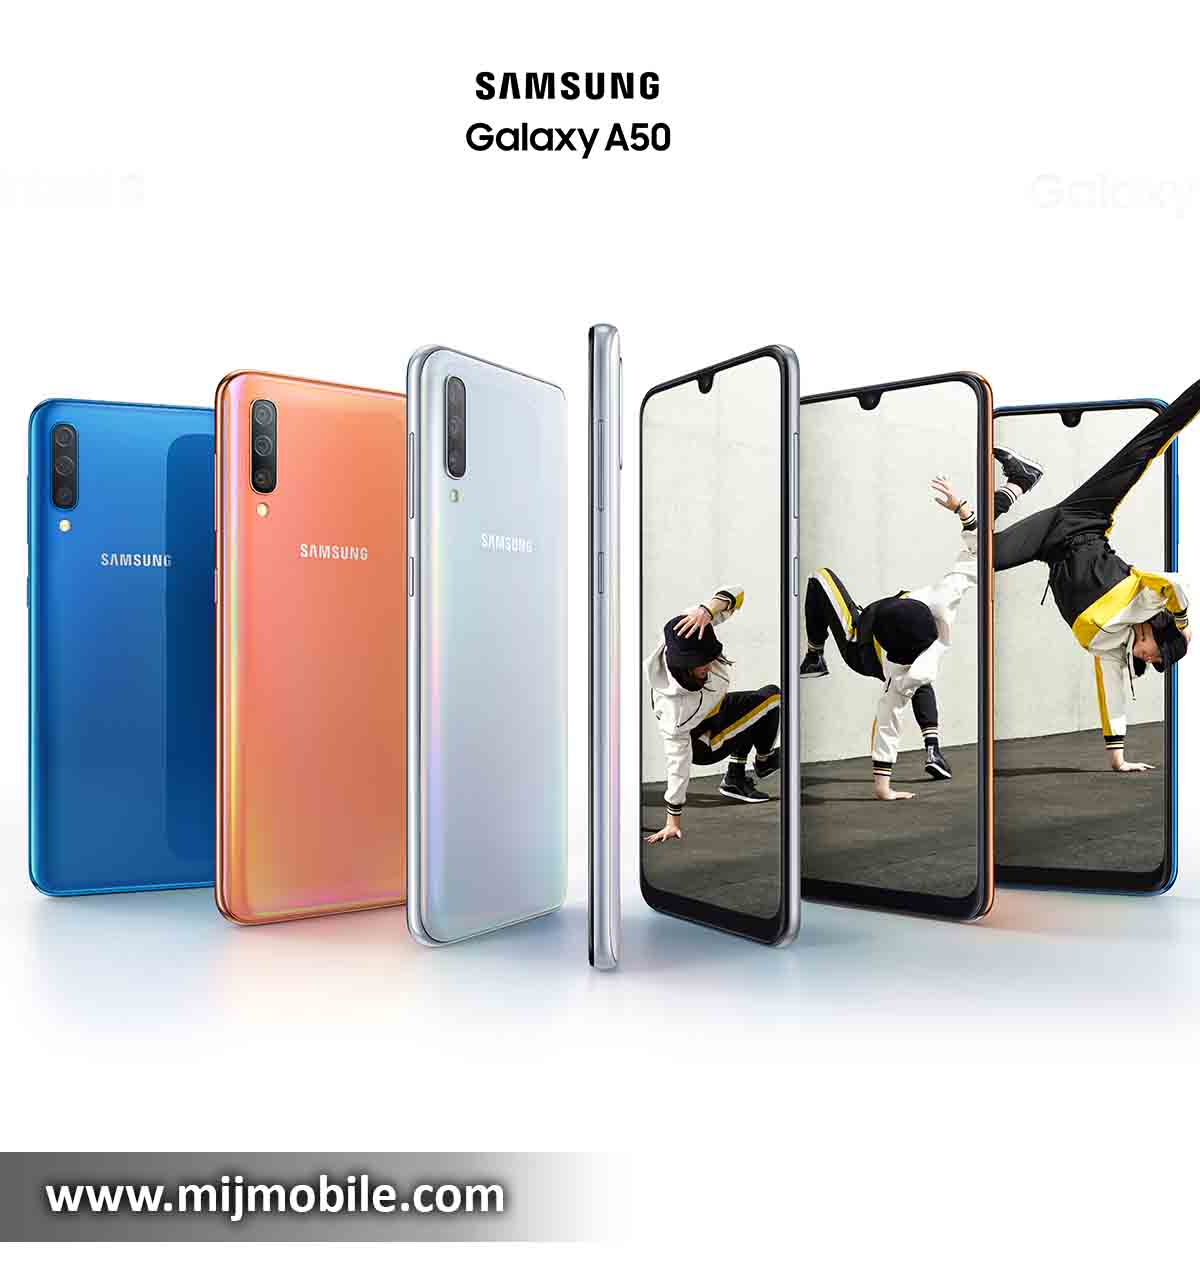 Samsung Galaxy A50 Price in Pakistan & Specifications Samsung Galaxy A50 Price in Pakistan is 49,000.